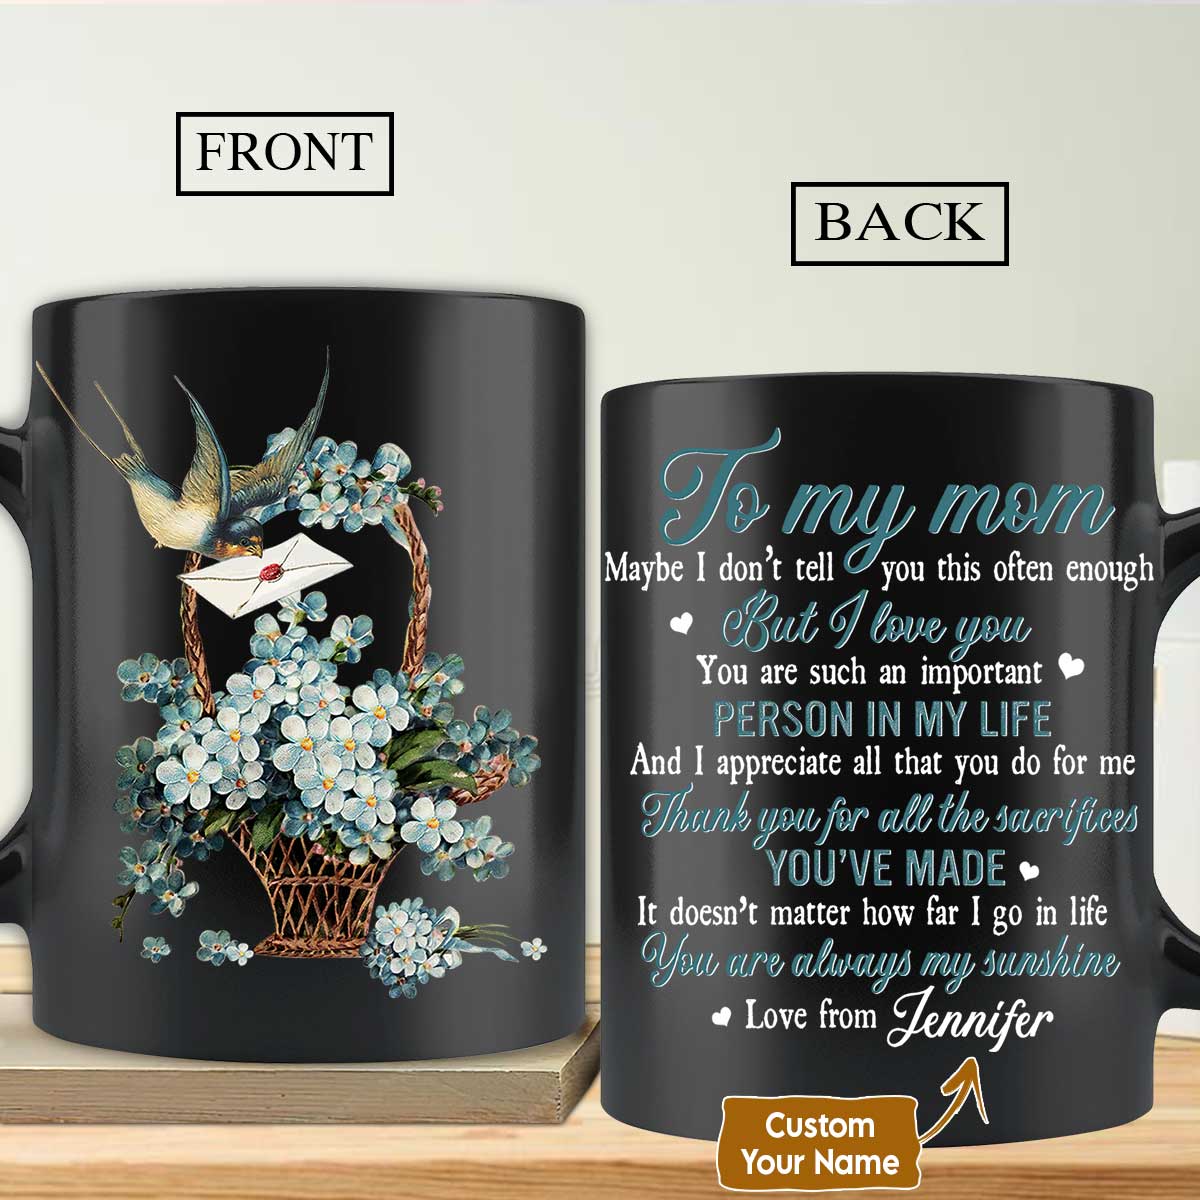 Gift For Mom Personalized Mug - Son to mom, Cherry blossom flowers, White letter Mug - Custom Gift For Mother's Day, Presents for Mom- My sunshine Mug